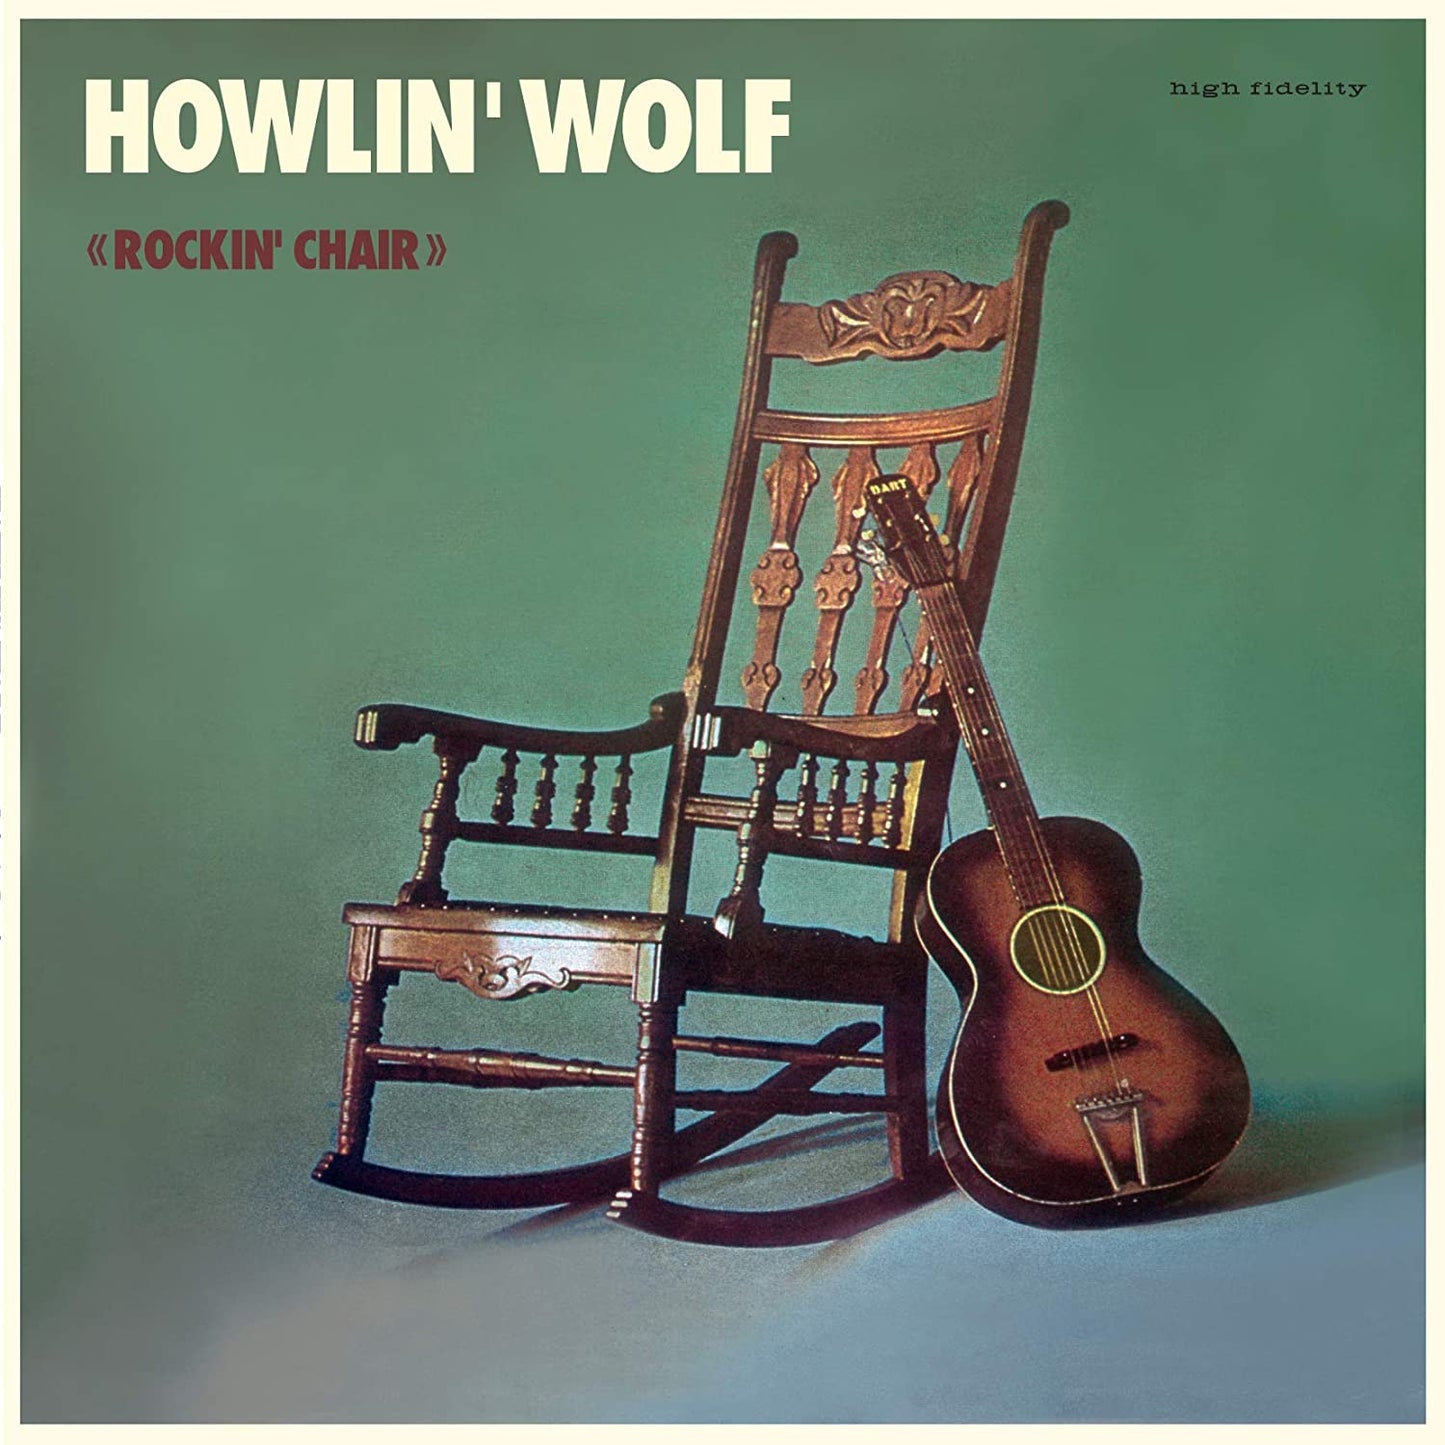 Howlin' Wolf - Howlin' Wolf (Rockin' Chair) - LP